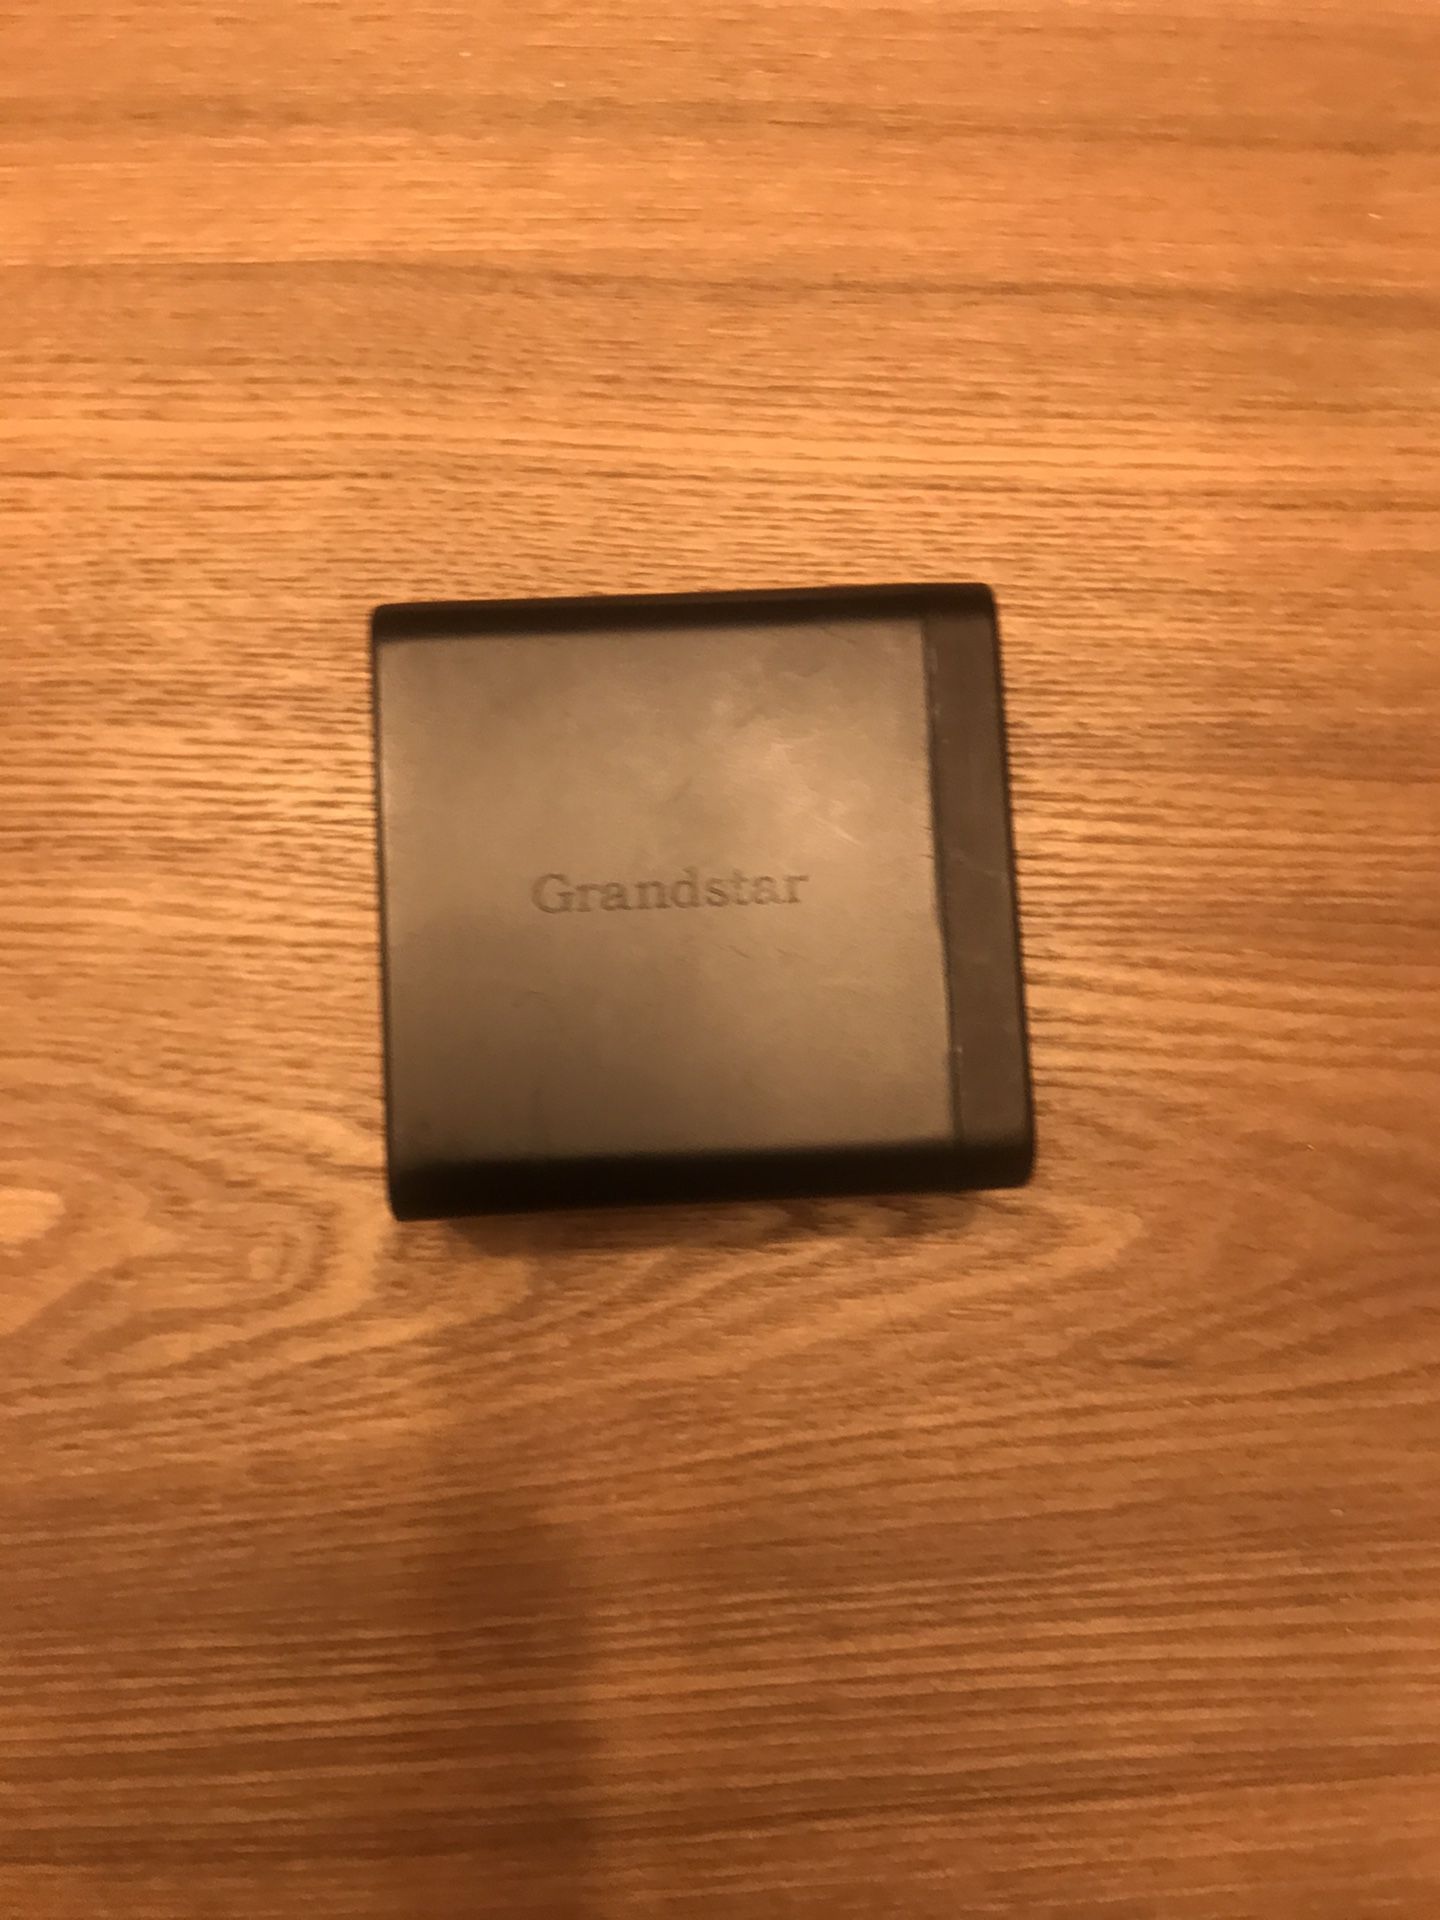 Grandstar USB C wall charger